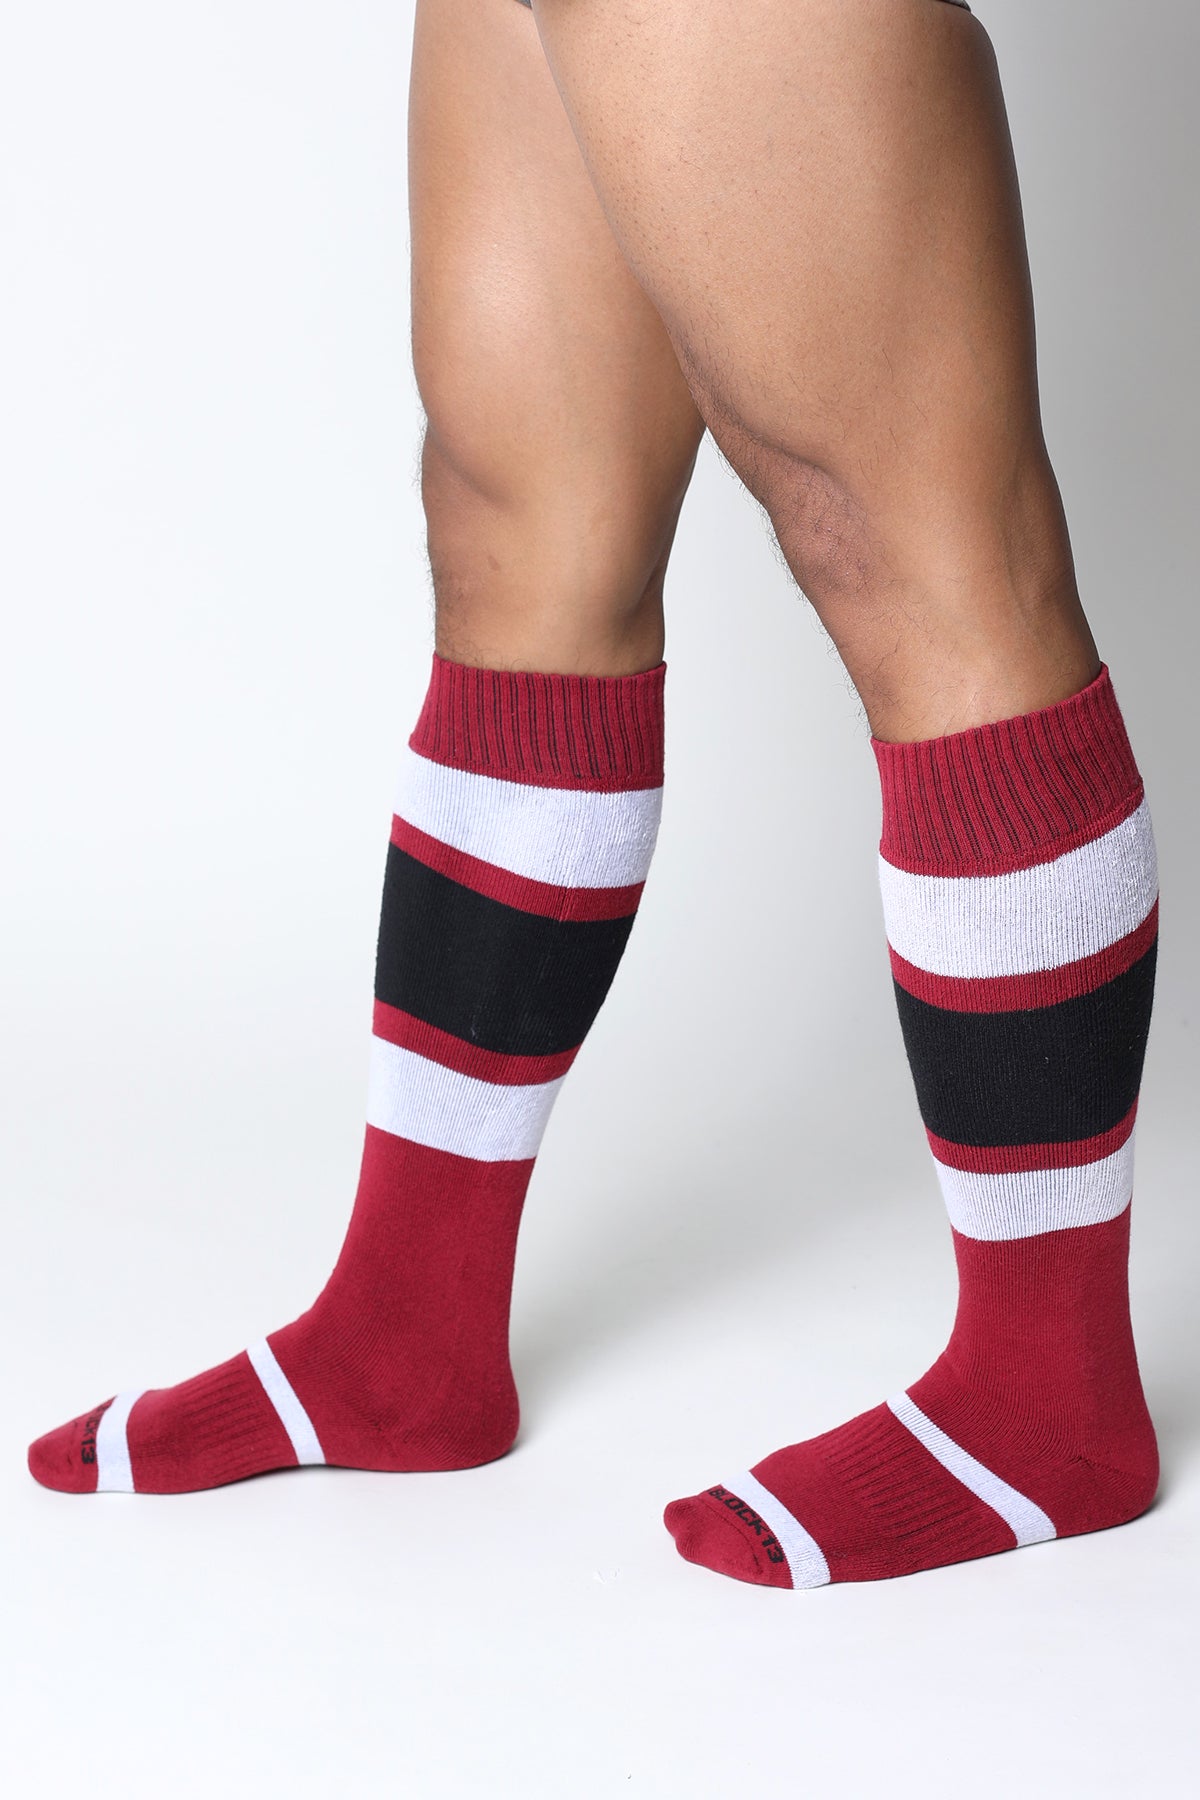 Halfback Knee High Socks